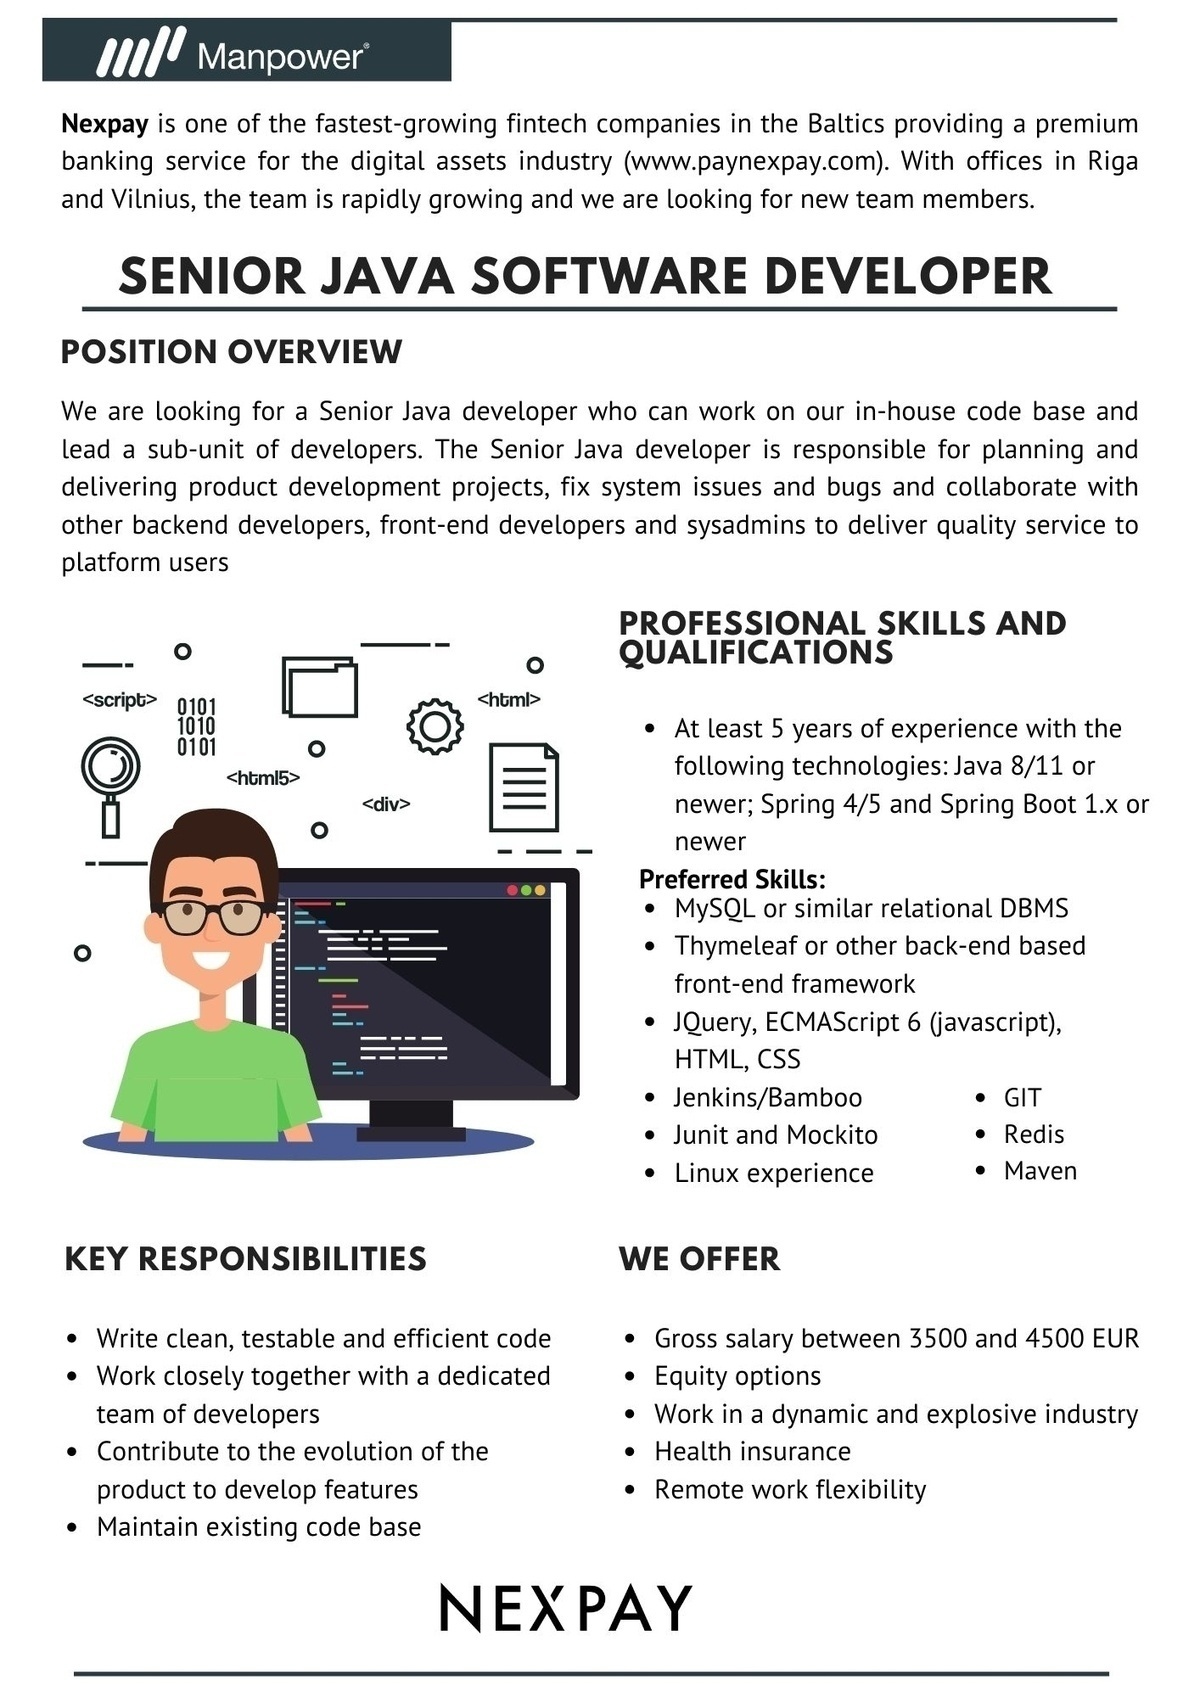 SAS "Manpower Lit" filiāle "Manpower Lit" Senior Java Software Developer